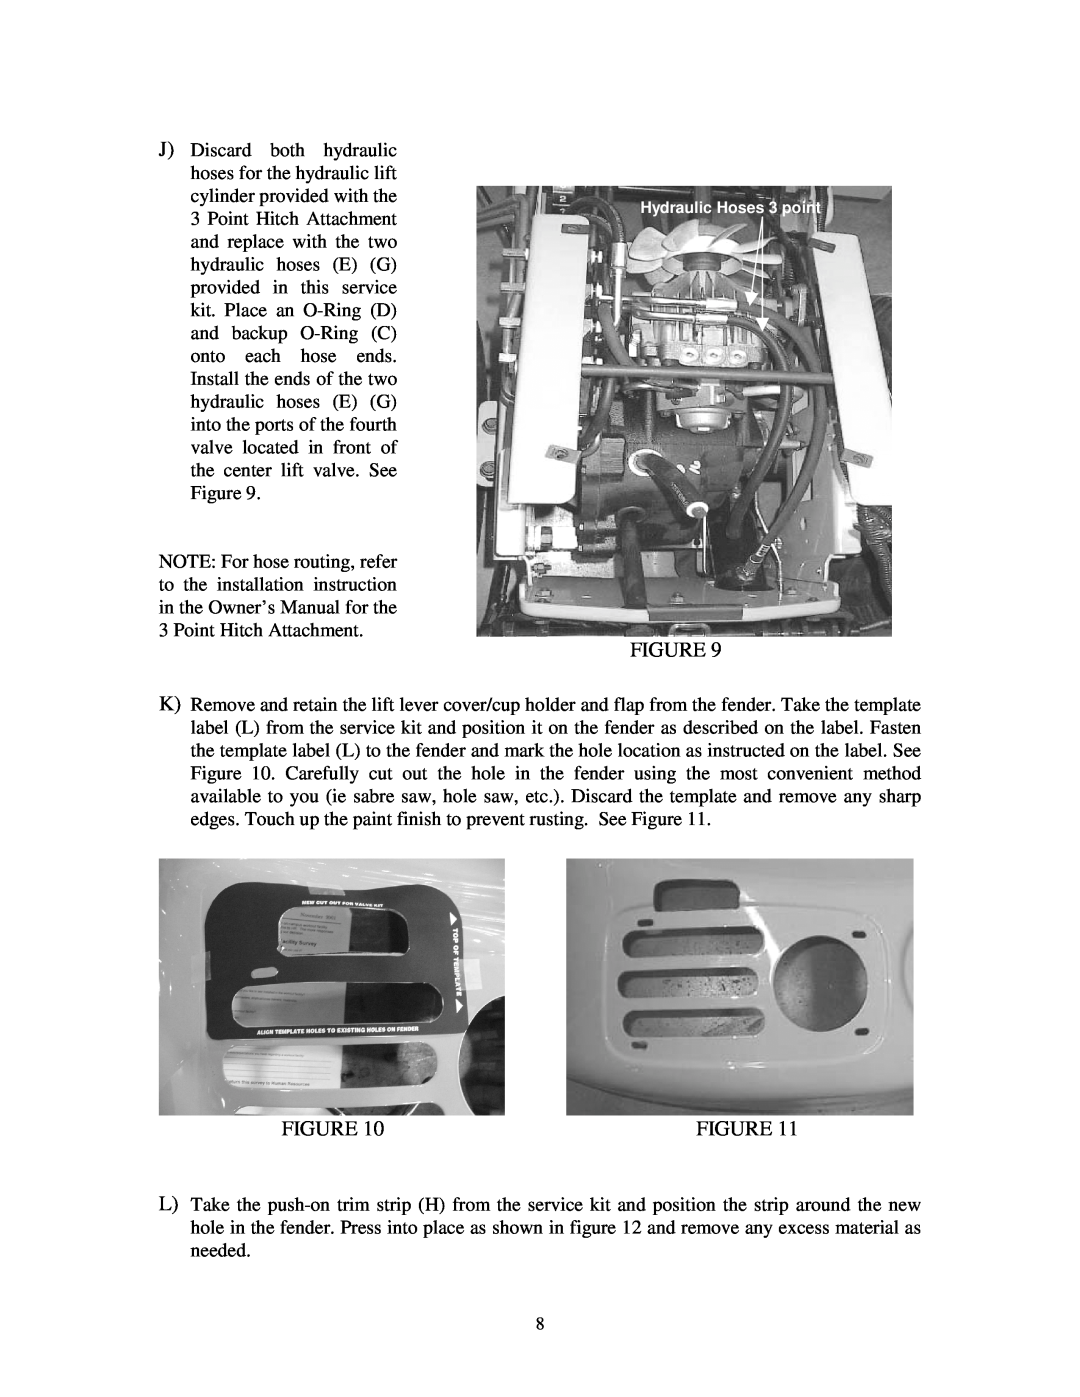 Bolens Series 3000 installation instructions Hydraulic Hoses 3 point 